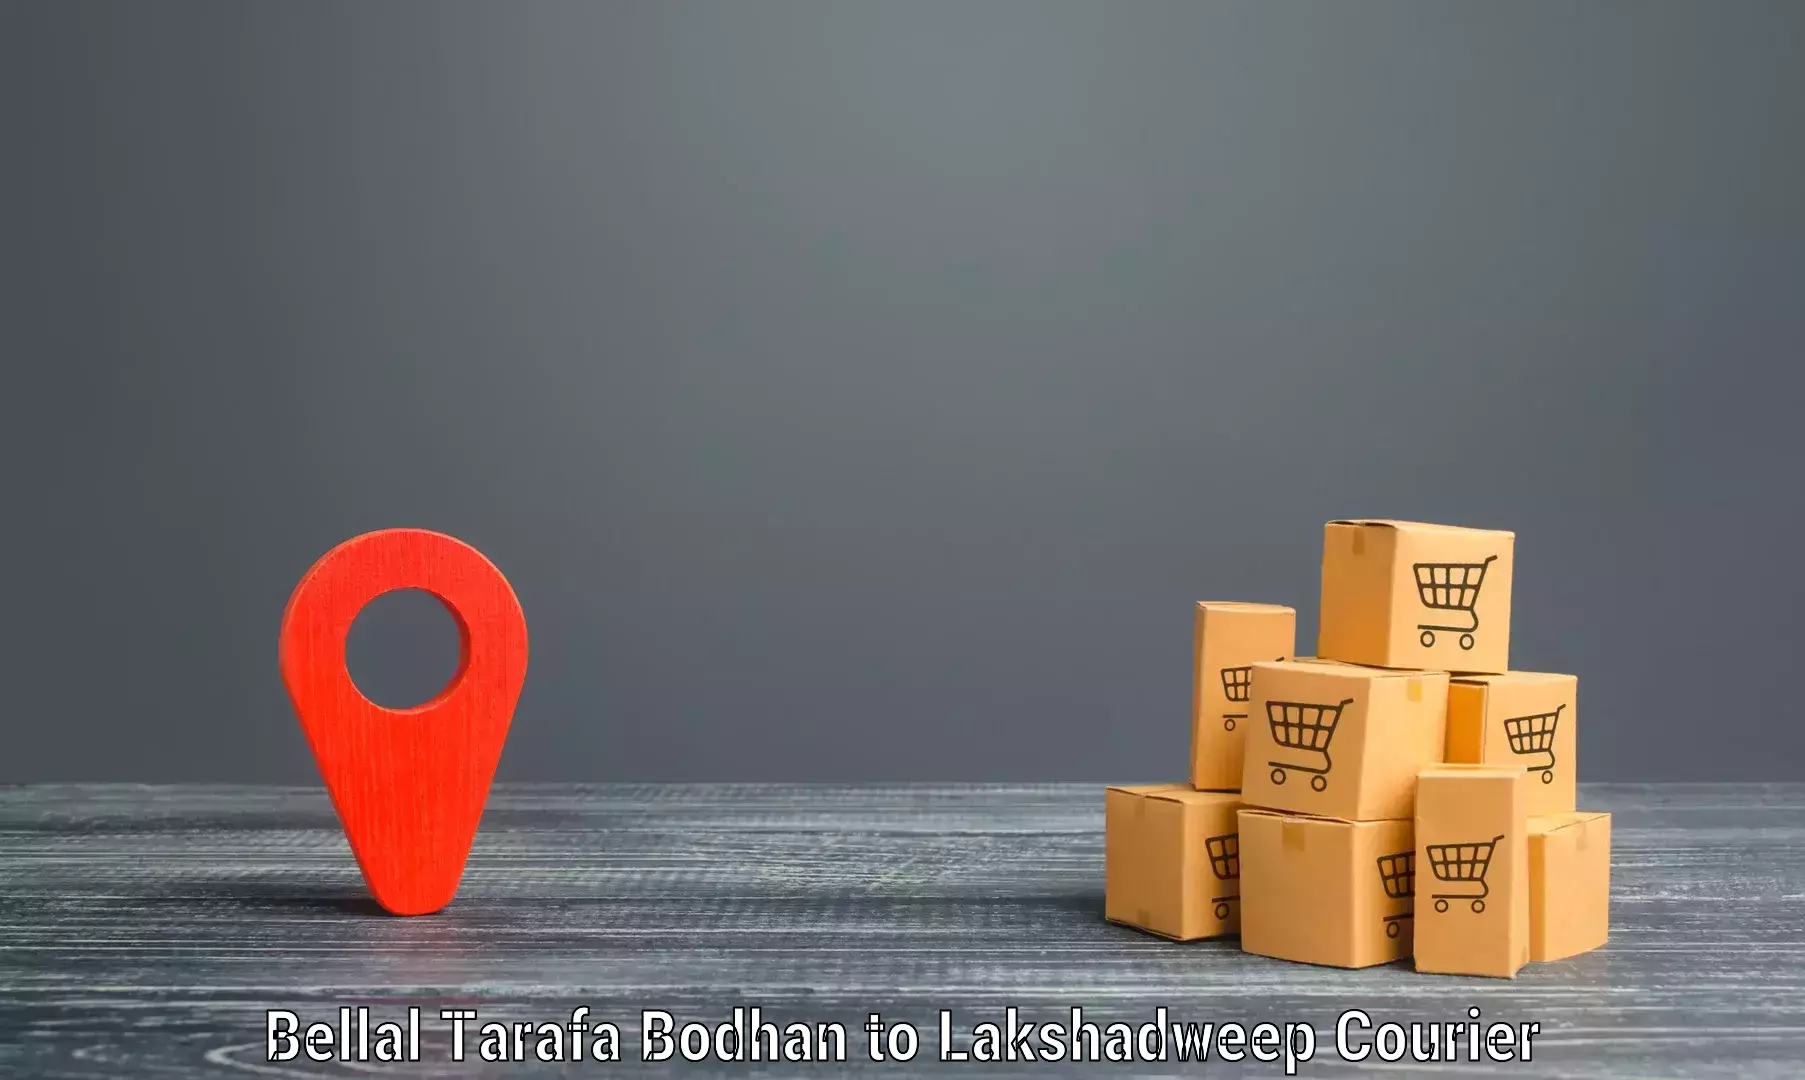 Multi-national courier services Bellal Tarafa Bodhan to Lakshadweep